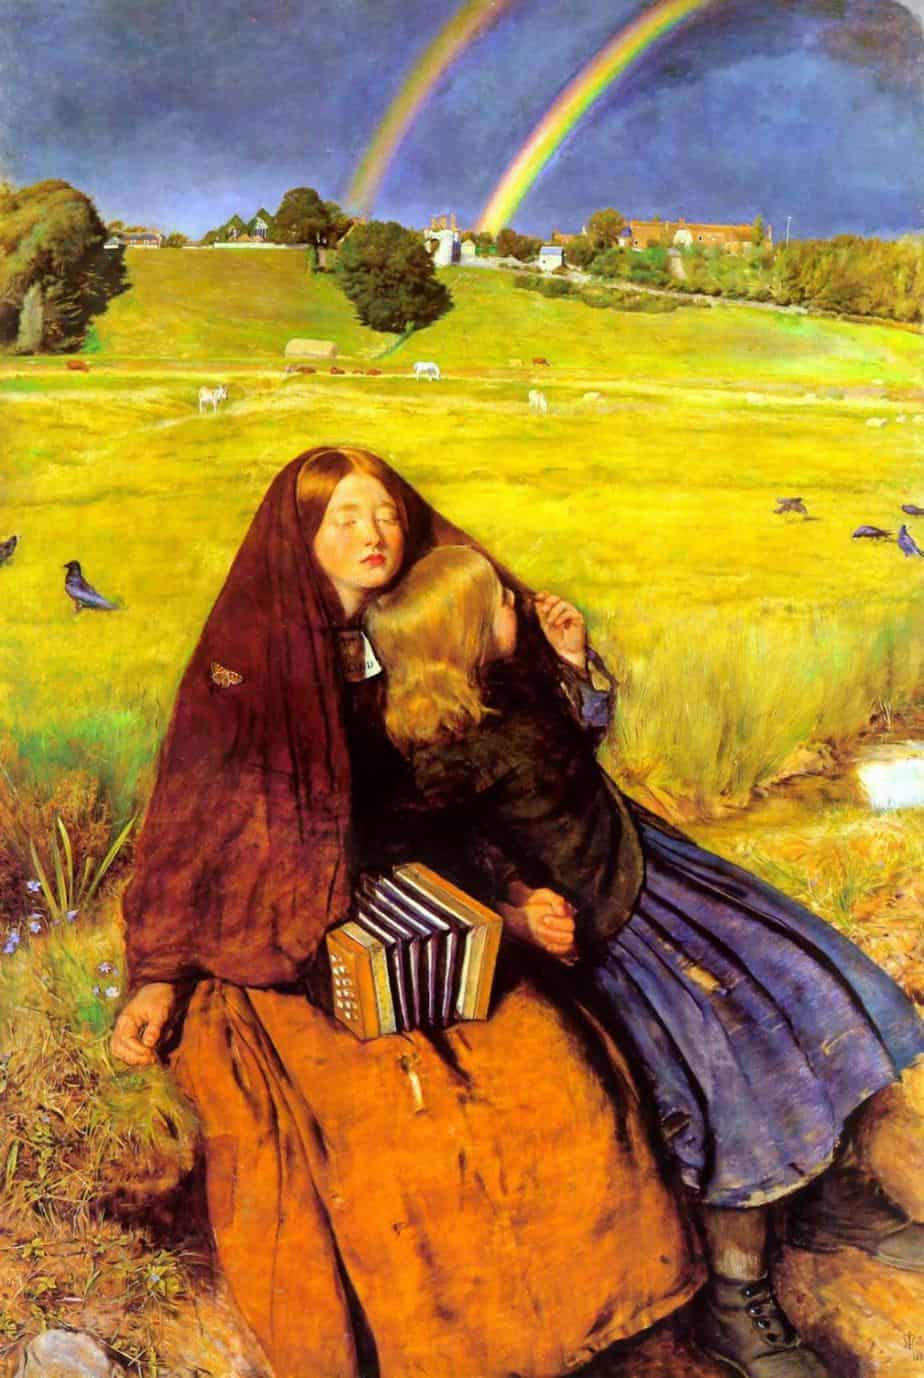 Johan Everret Millais (1829-1896) 'The Blind Girl' (1854-1856)